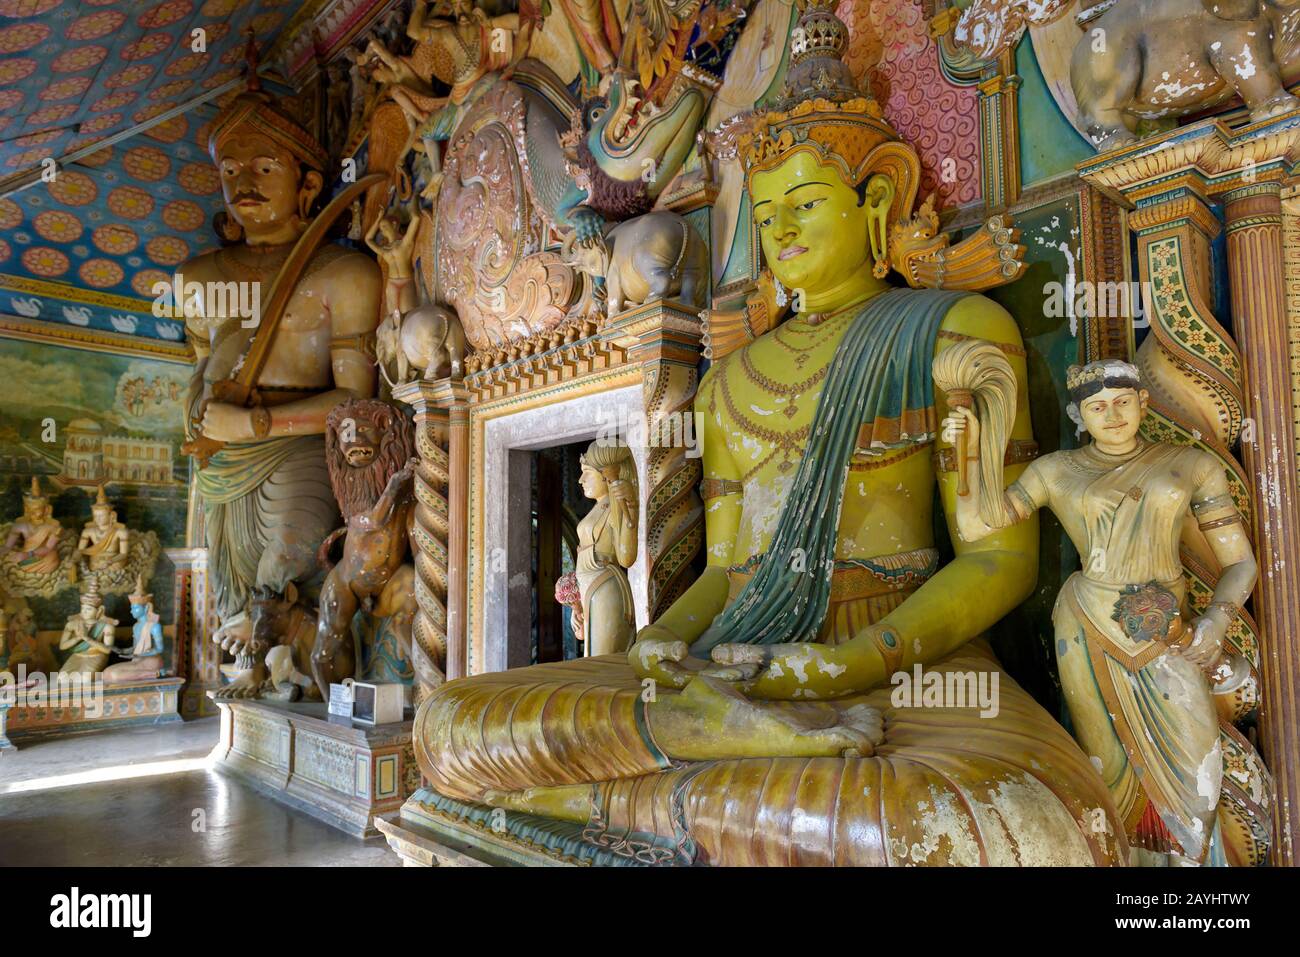 Dickwella, Sri Lanka - November 4, 2017: Buddha statue inside the Wewurukannala Buddhist temple. Luxurious interior of old Buddhist place of worship. Stock Photo